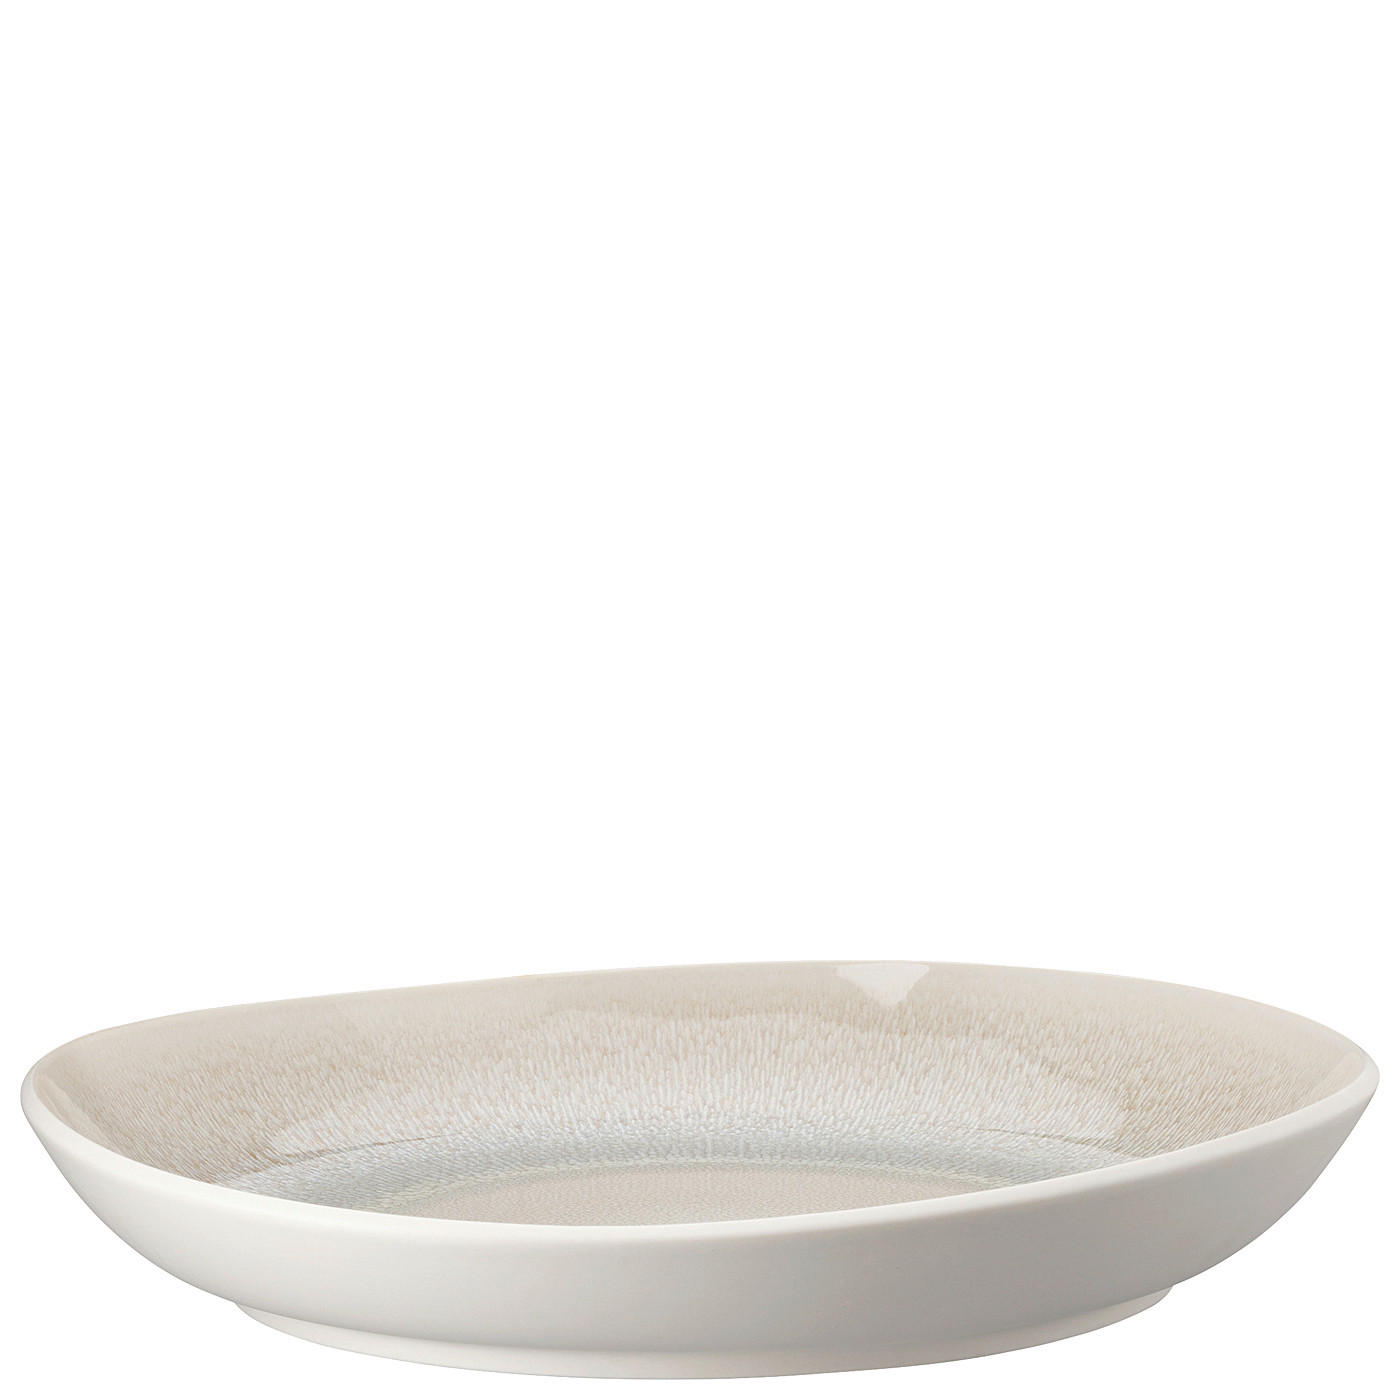 TELLER Junto Dune  - Beige, LIFESTYLE, Keramik (33,3/32/5,4cm) - Rosenthal